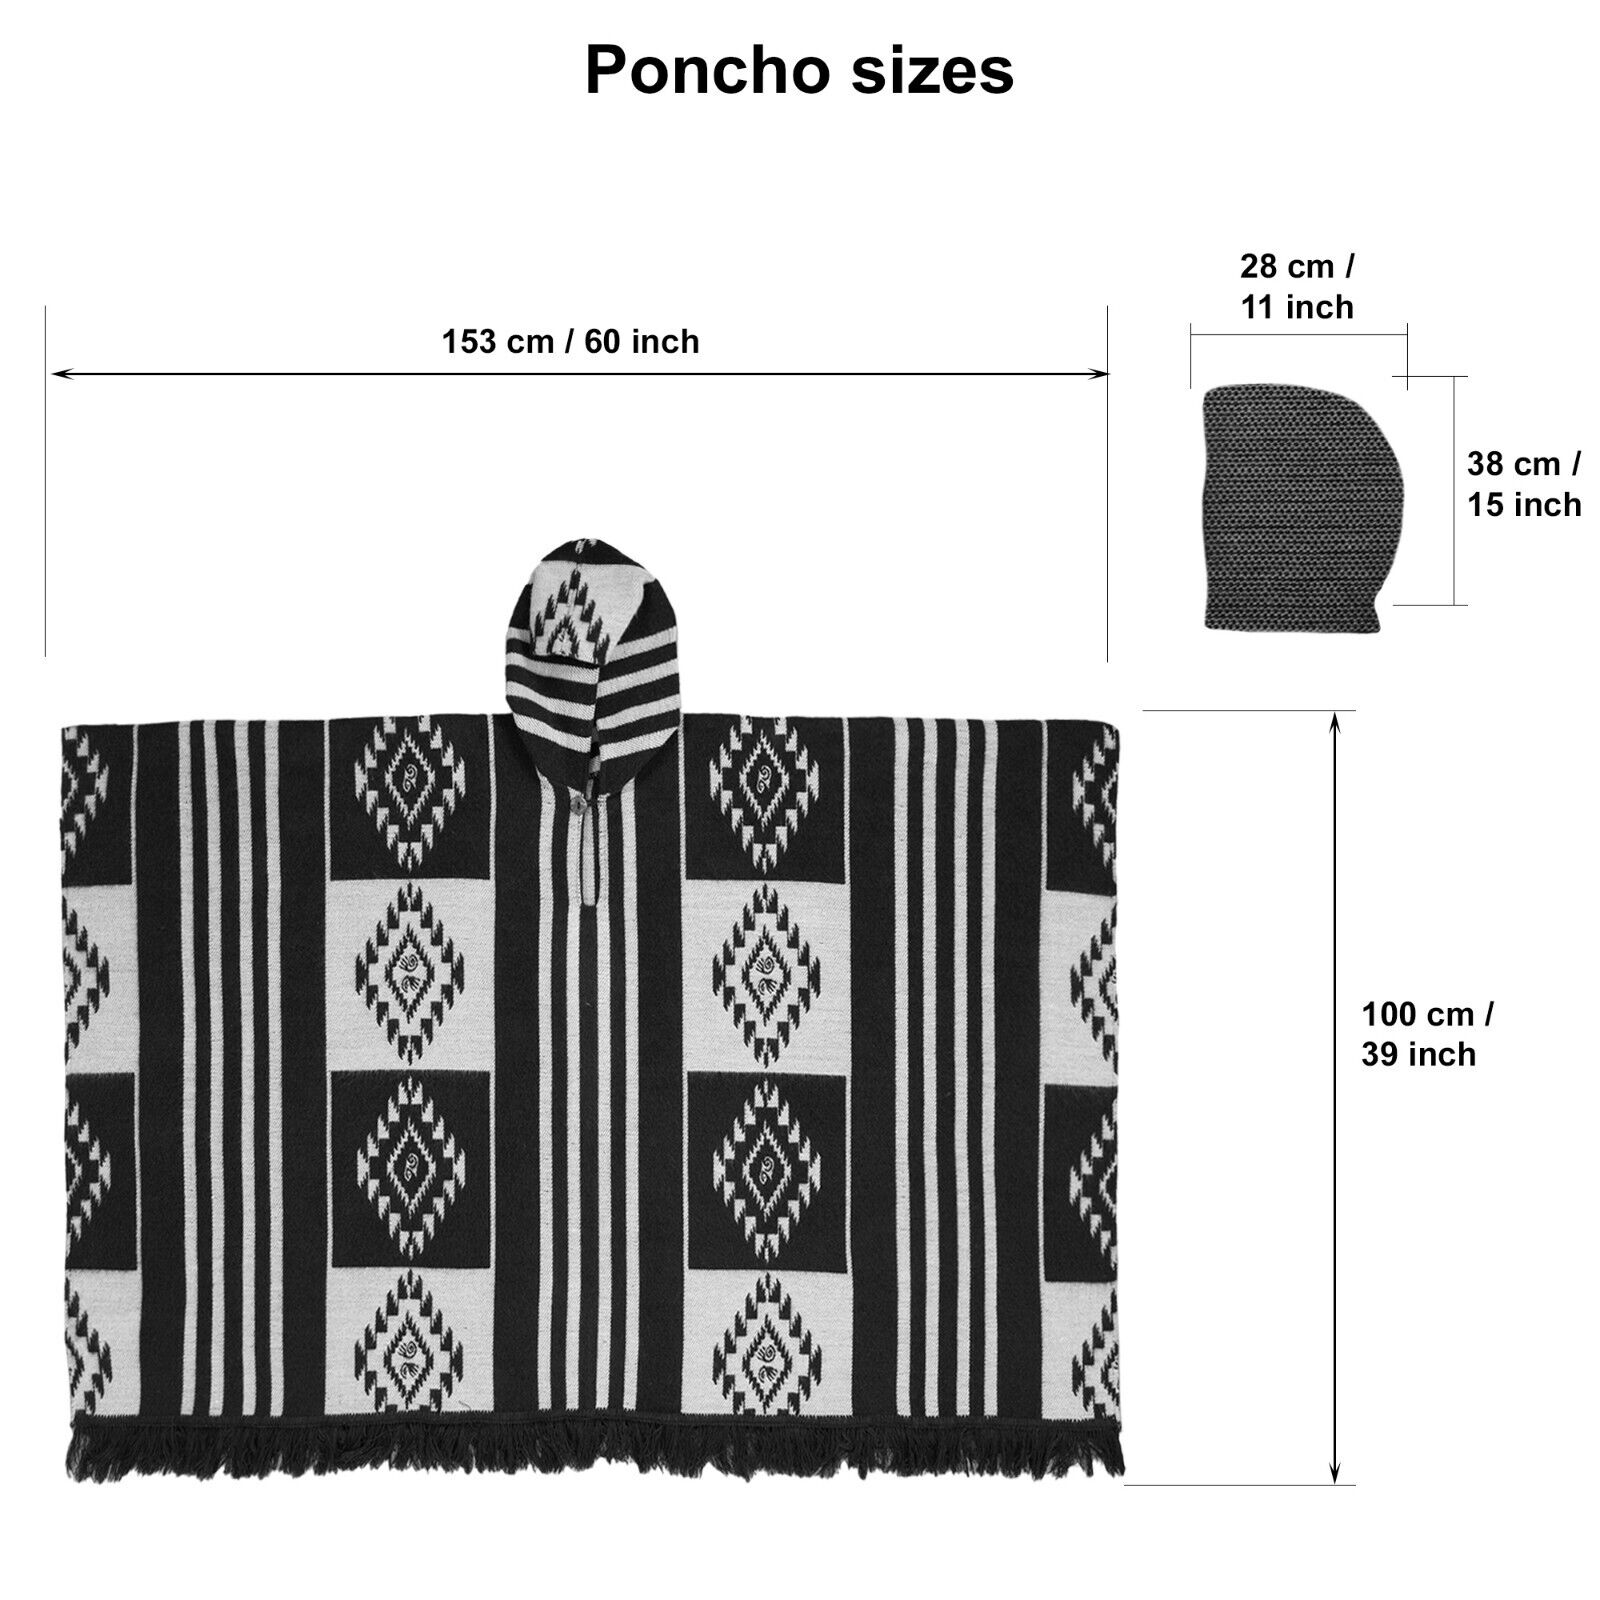 Numbilungo - Baby Alpaca wool Unisex Hooded Poncho Pullover XXL - brown - Aztec pattern